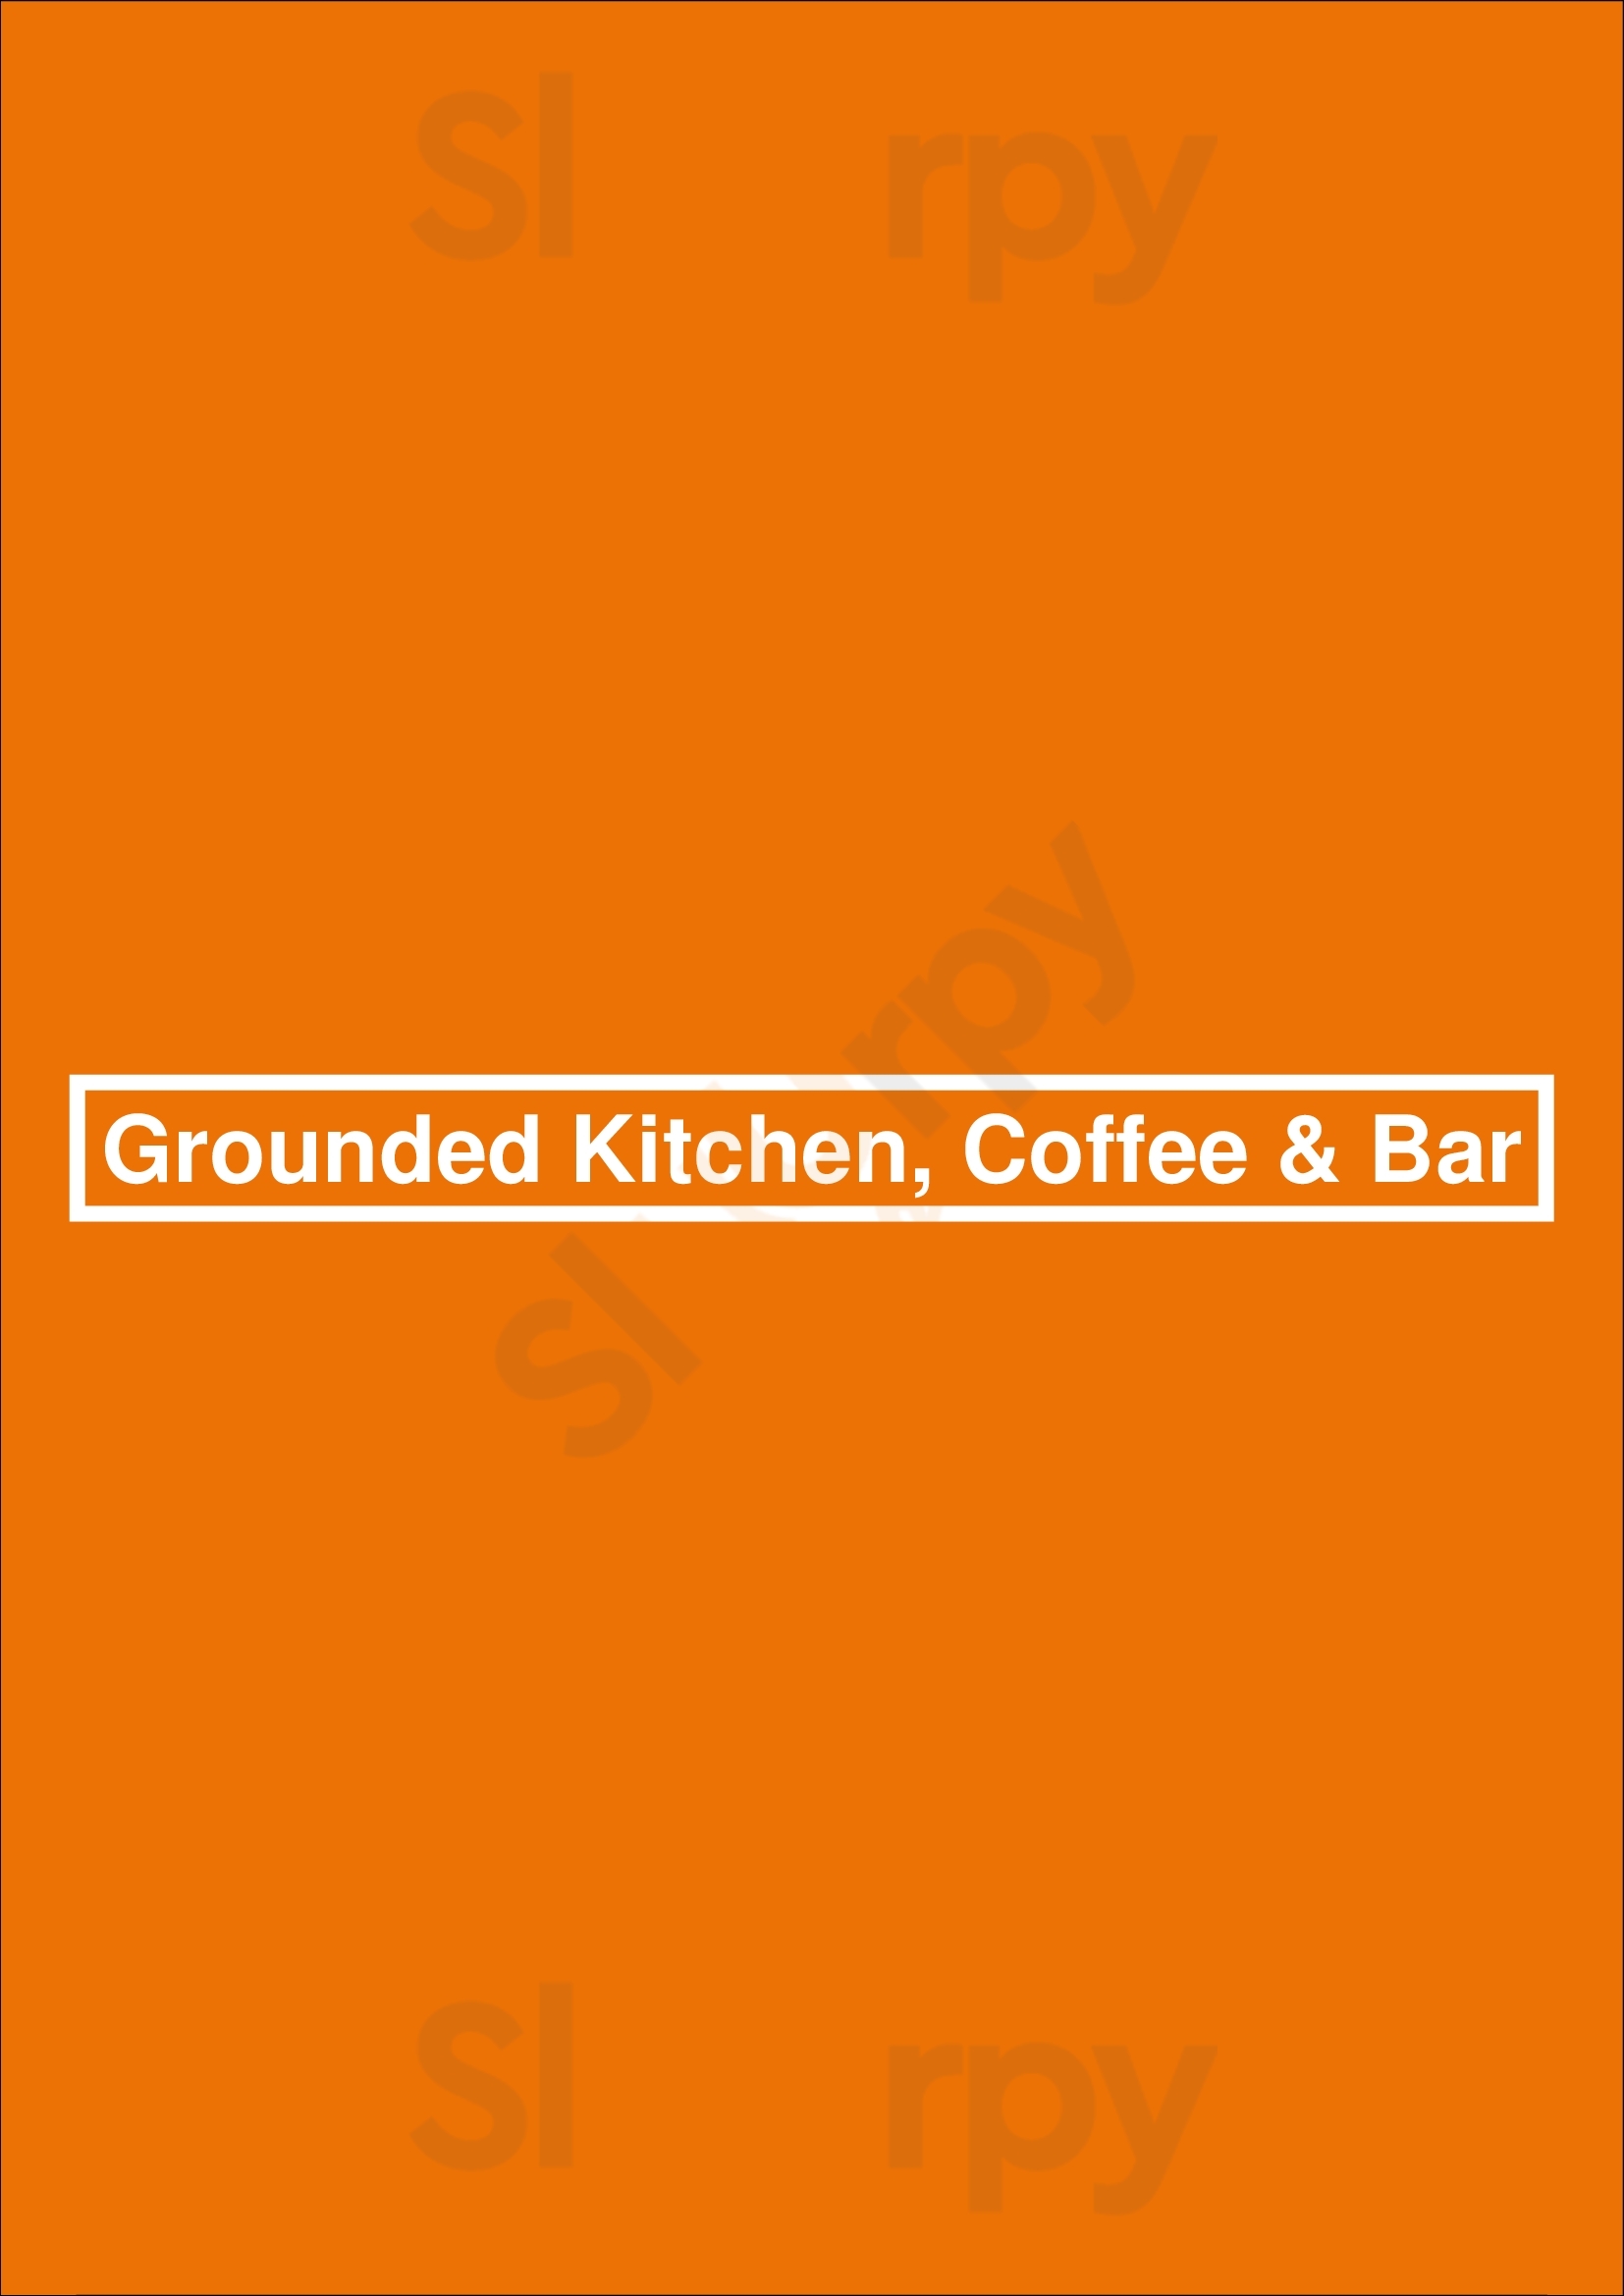 Grounded Kitchen, Coffee & Bar Ottawa Menu - 1